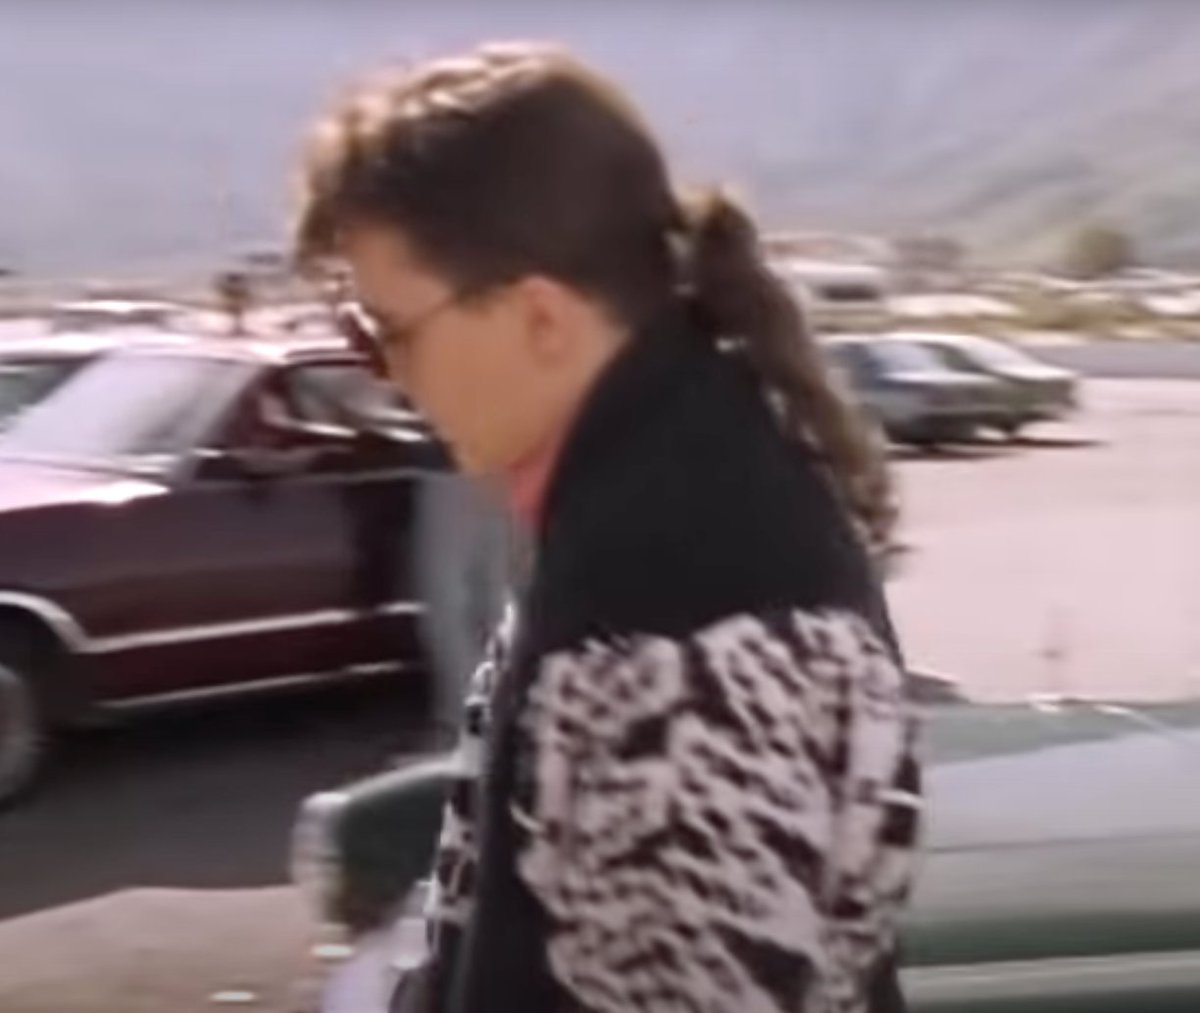 Screenshot lightning round! What #80s video features this stellar rat tail??